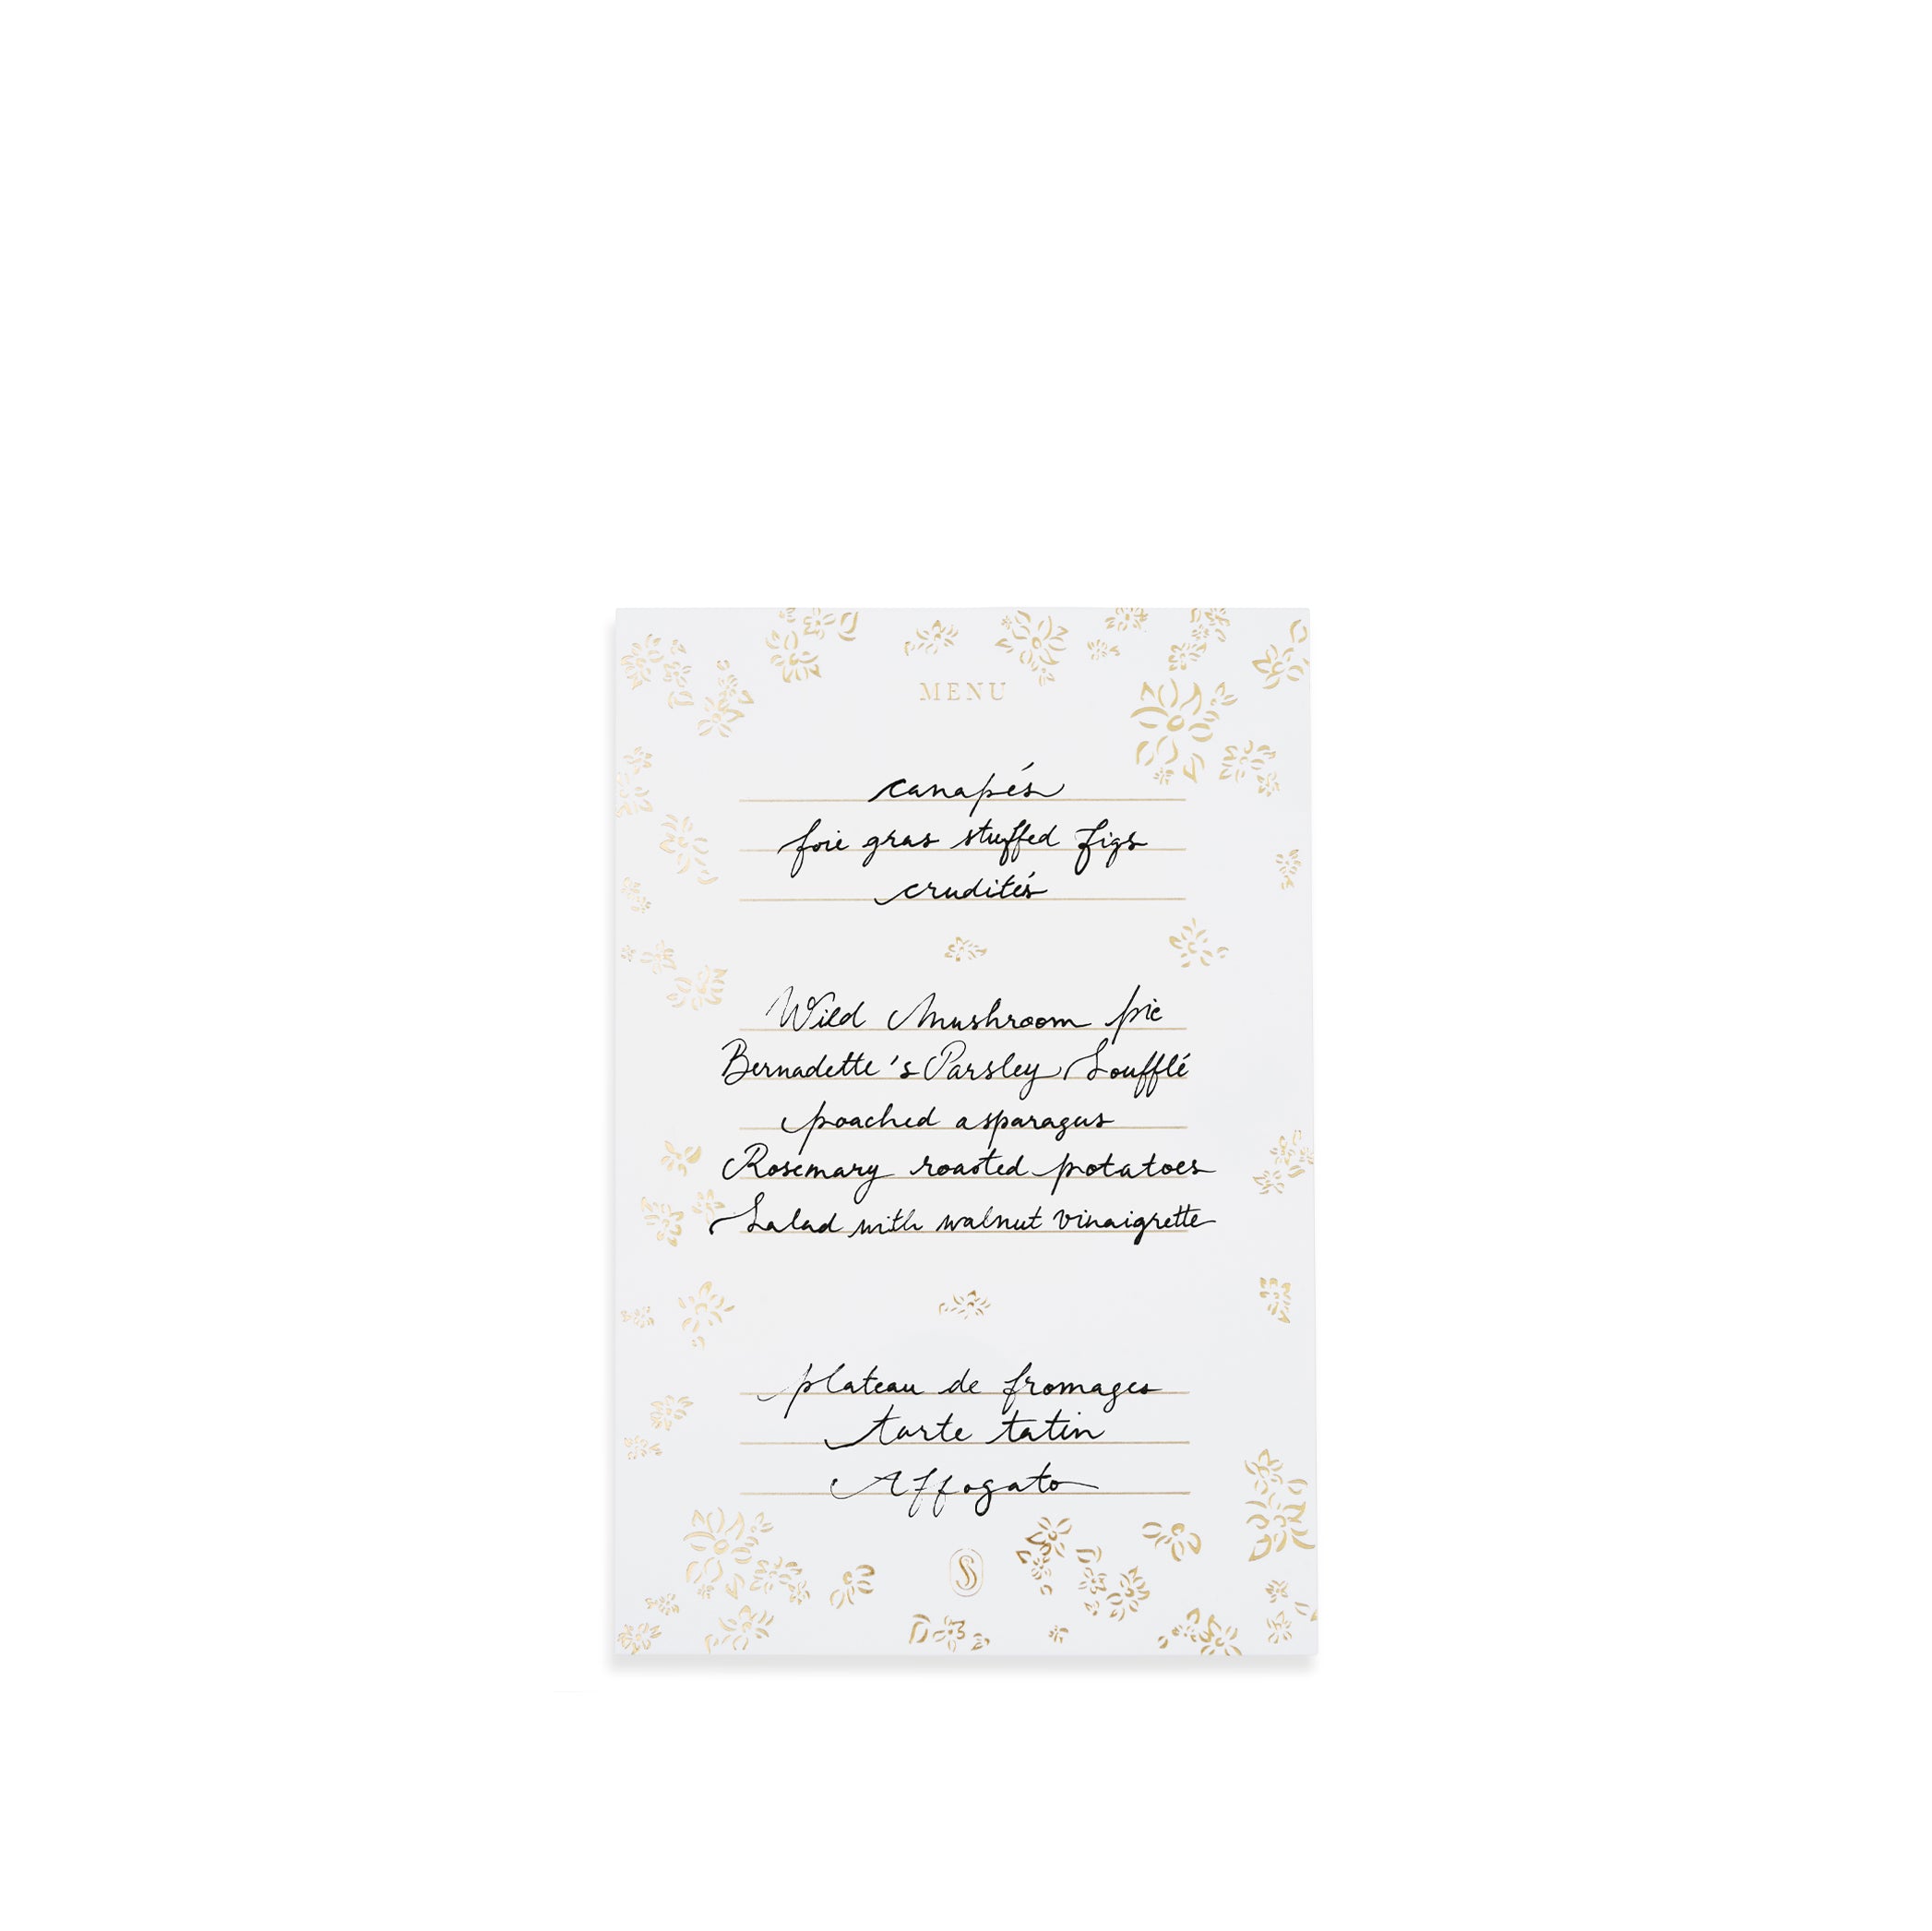 Summerill & Bishop Gold Foiled Falling Flower Table Menu Cards, Packet of 12